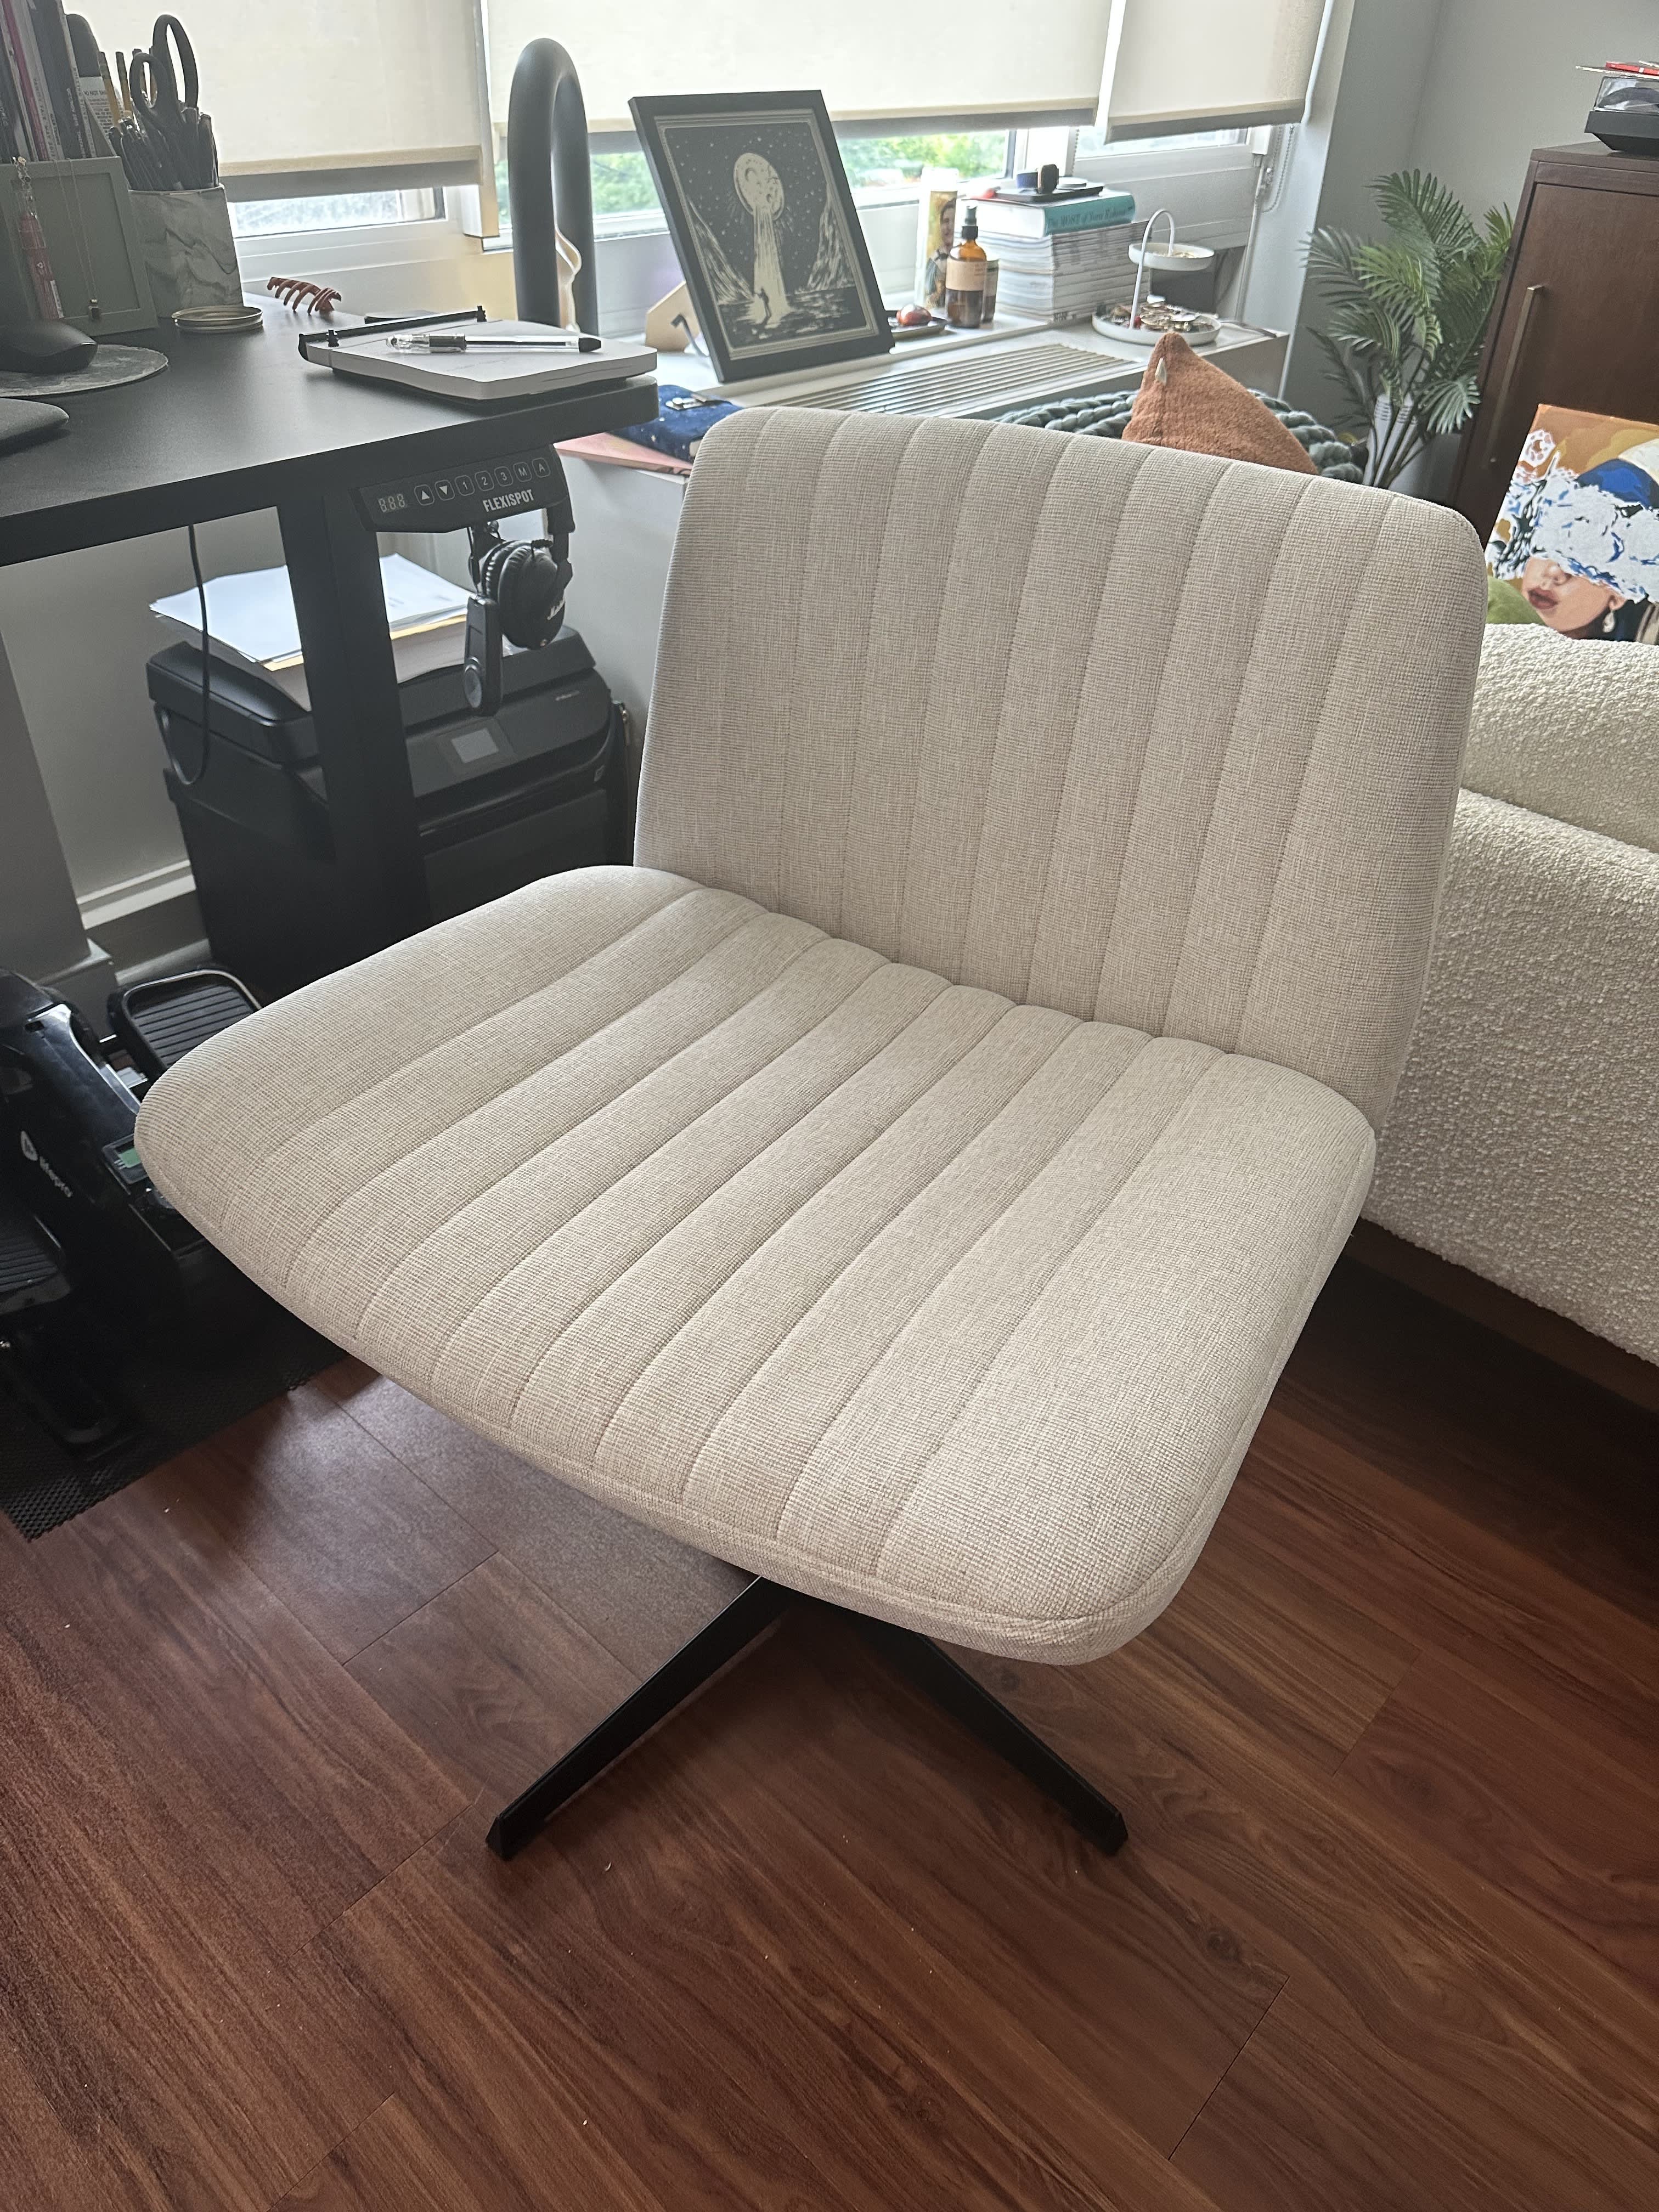 https://cdn.apartmenttherapy.info/image/upload/v1692299022/at/s-vazquez-pukami-cross-leg-chair-tiktok.jpg